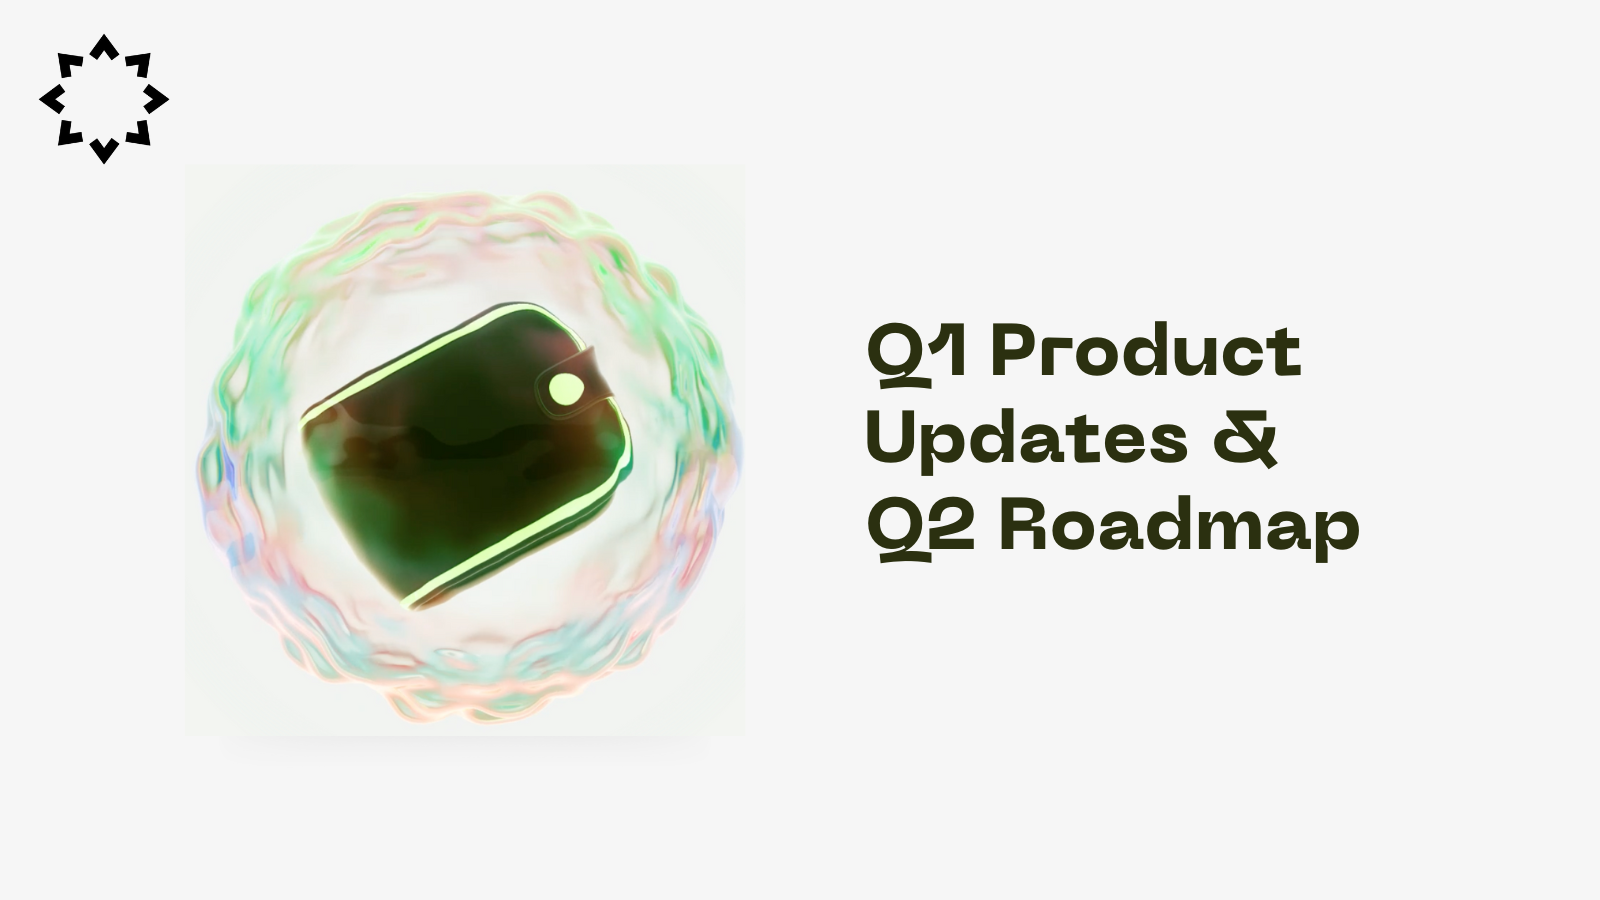 A Quick Recap of What Shipped in Q1 & a Sneak Peek of the Q2 Roadmap